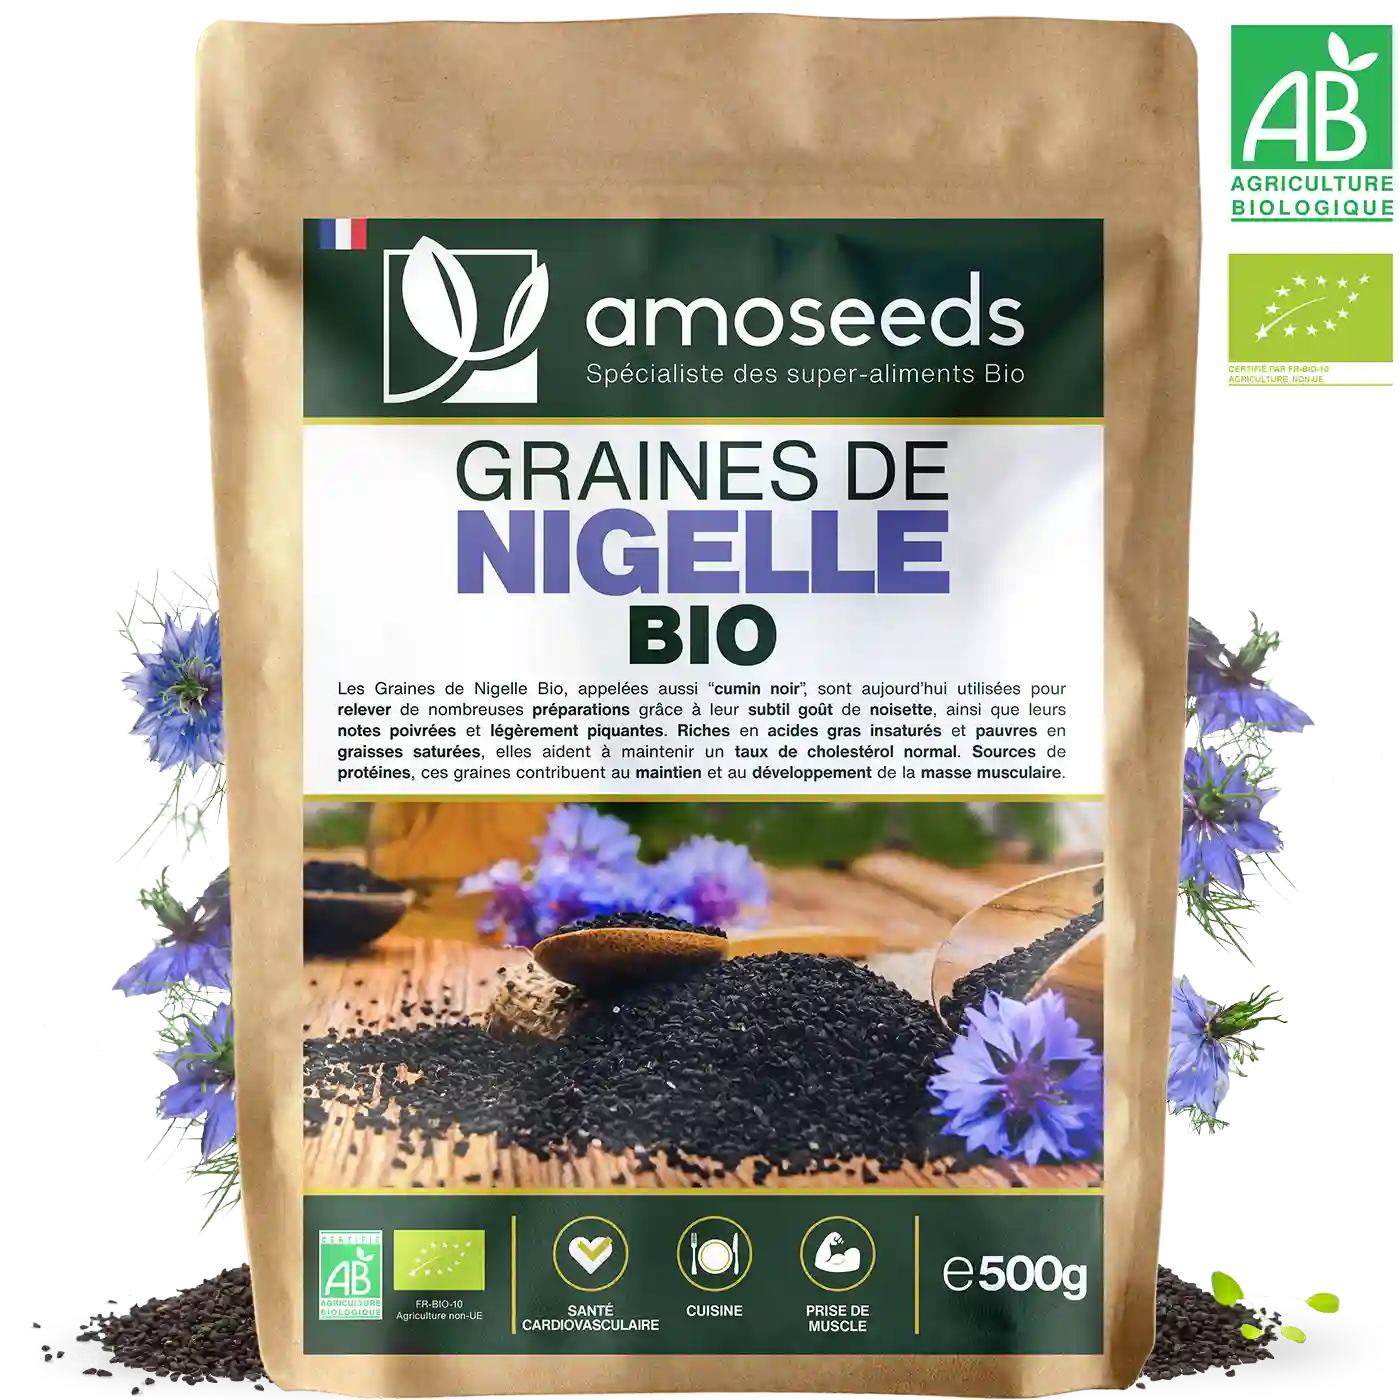 Graines de Nigelle Bio amoseeds specialiste des super aliments Bioa